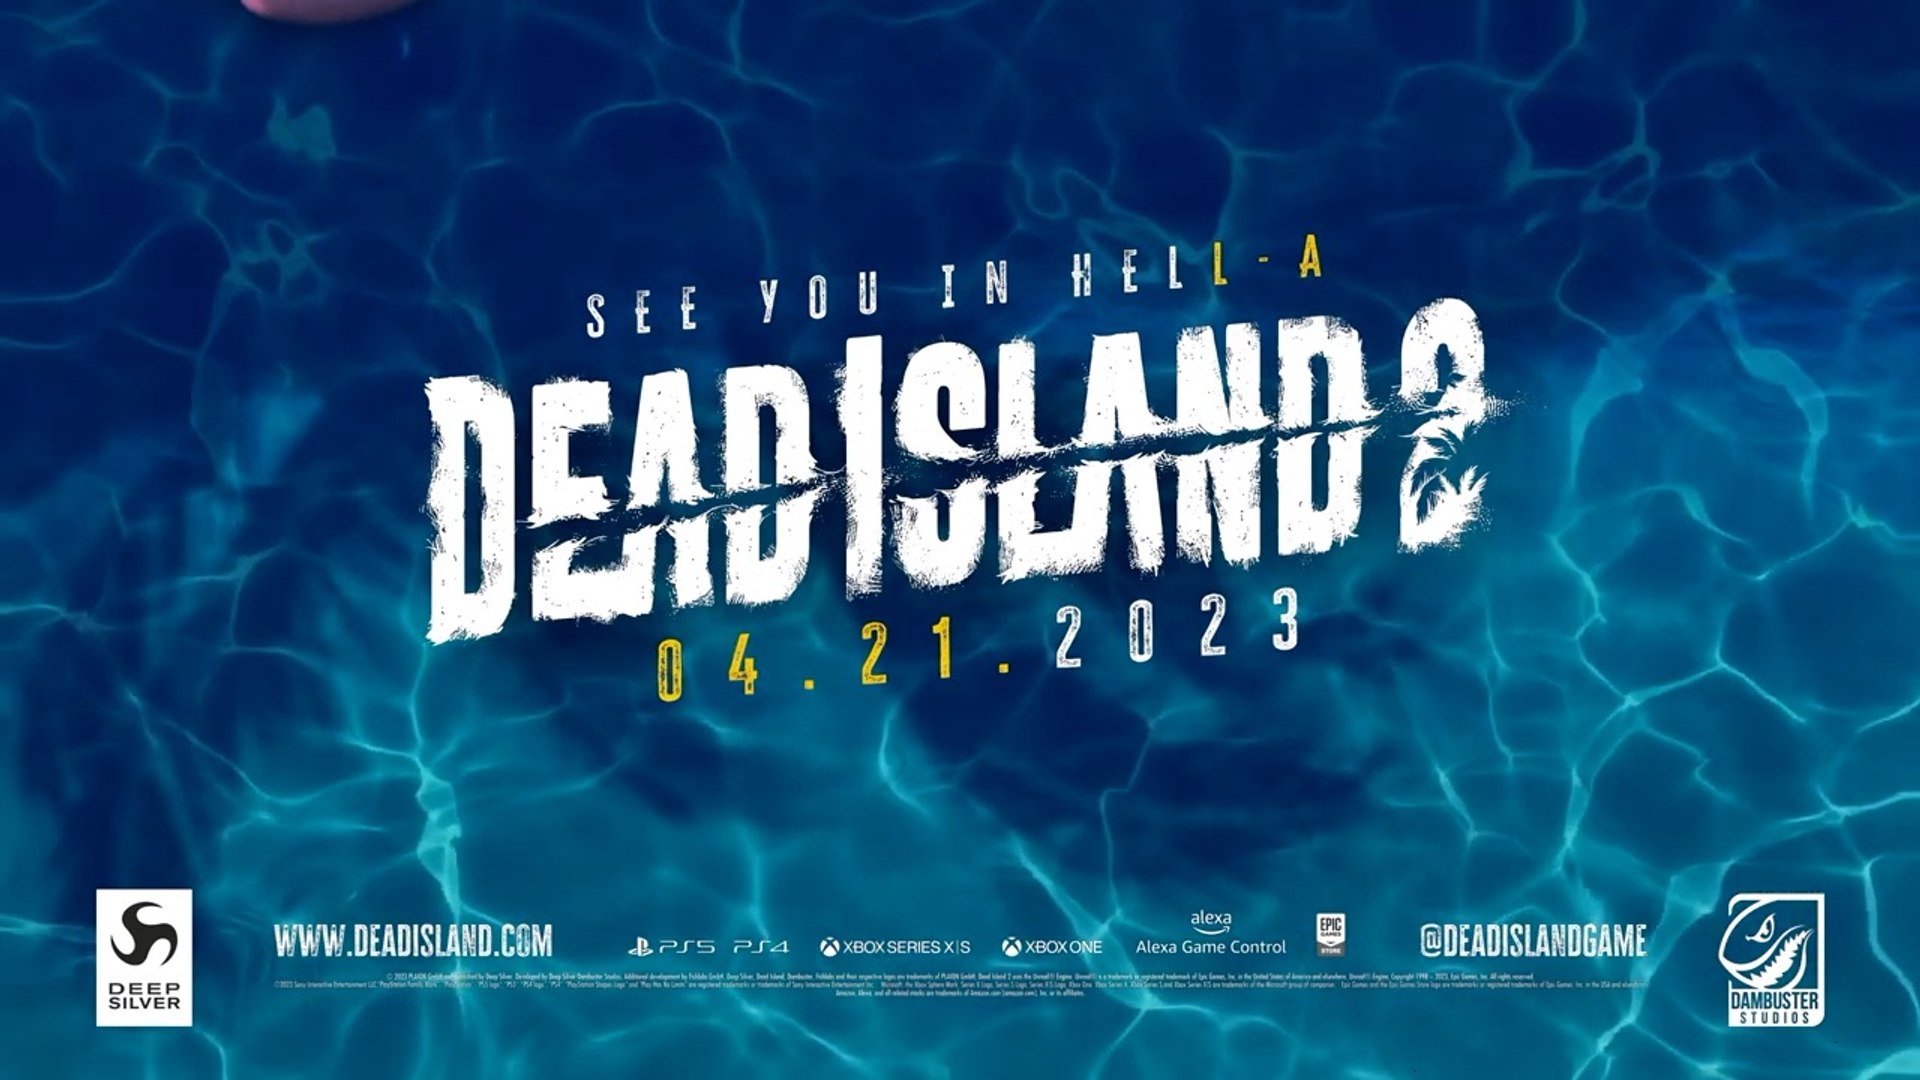 Jogo PS4 Dead Island 2